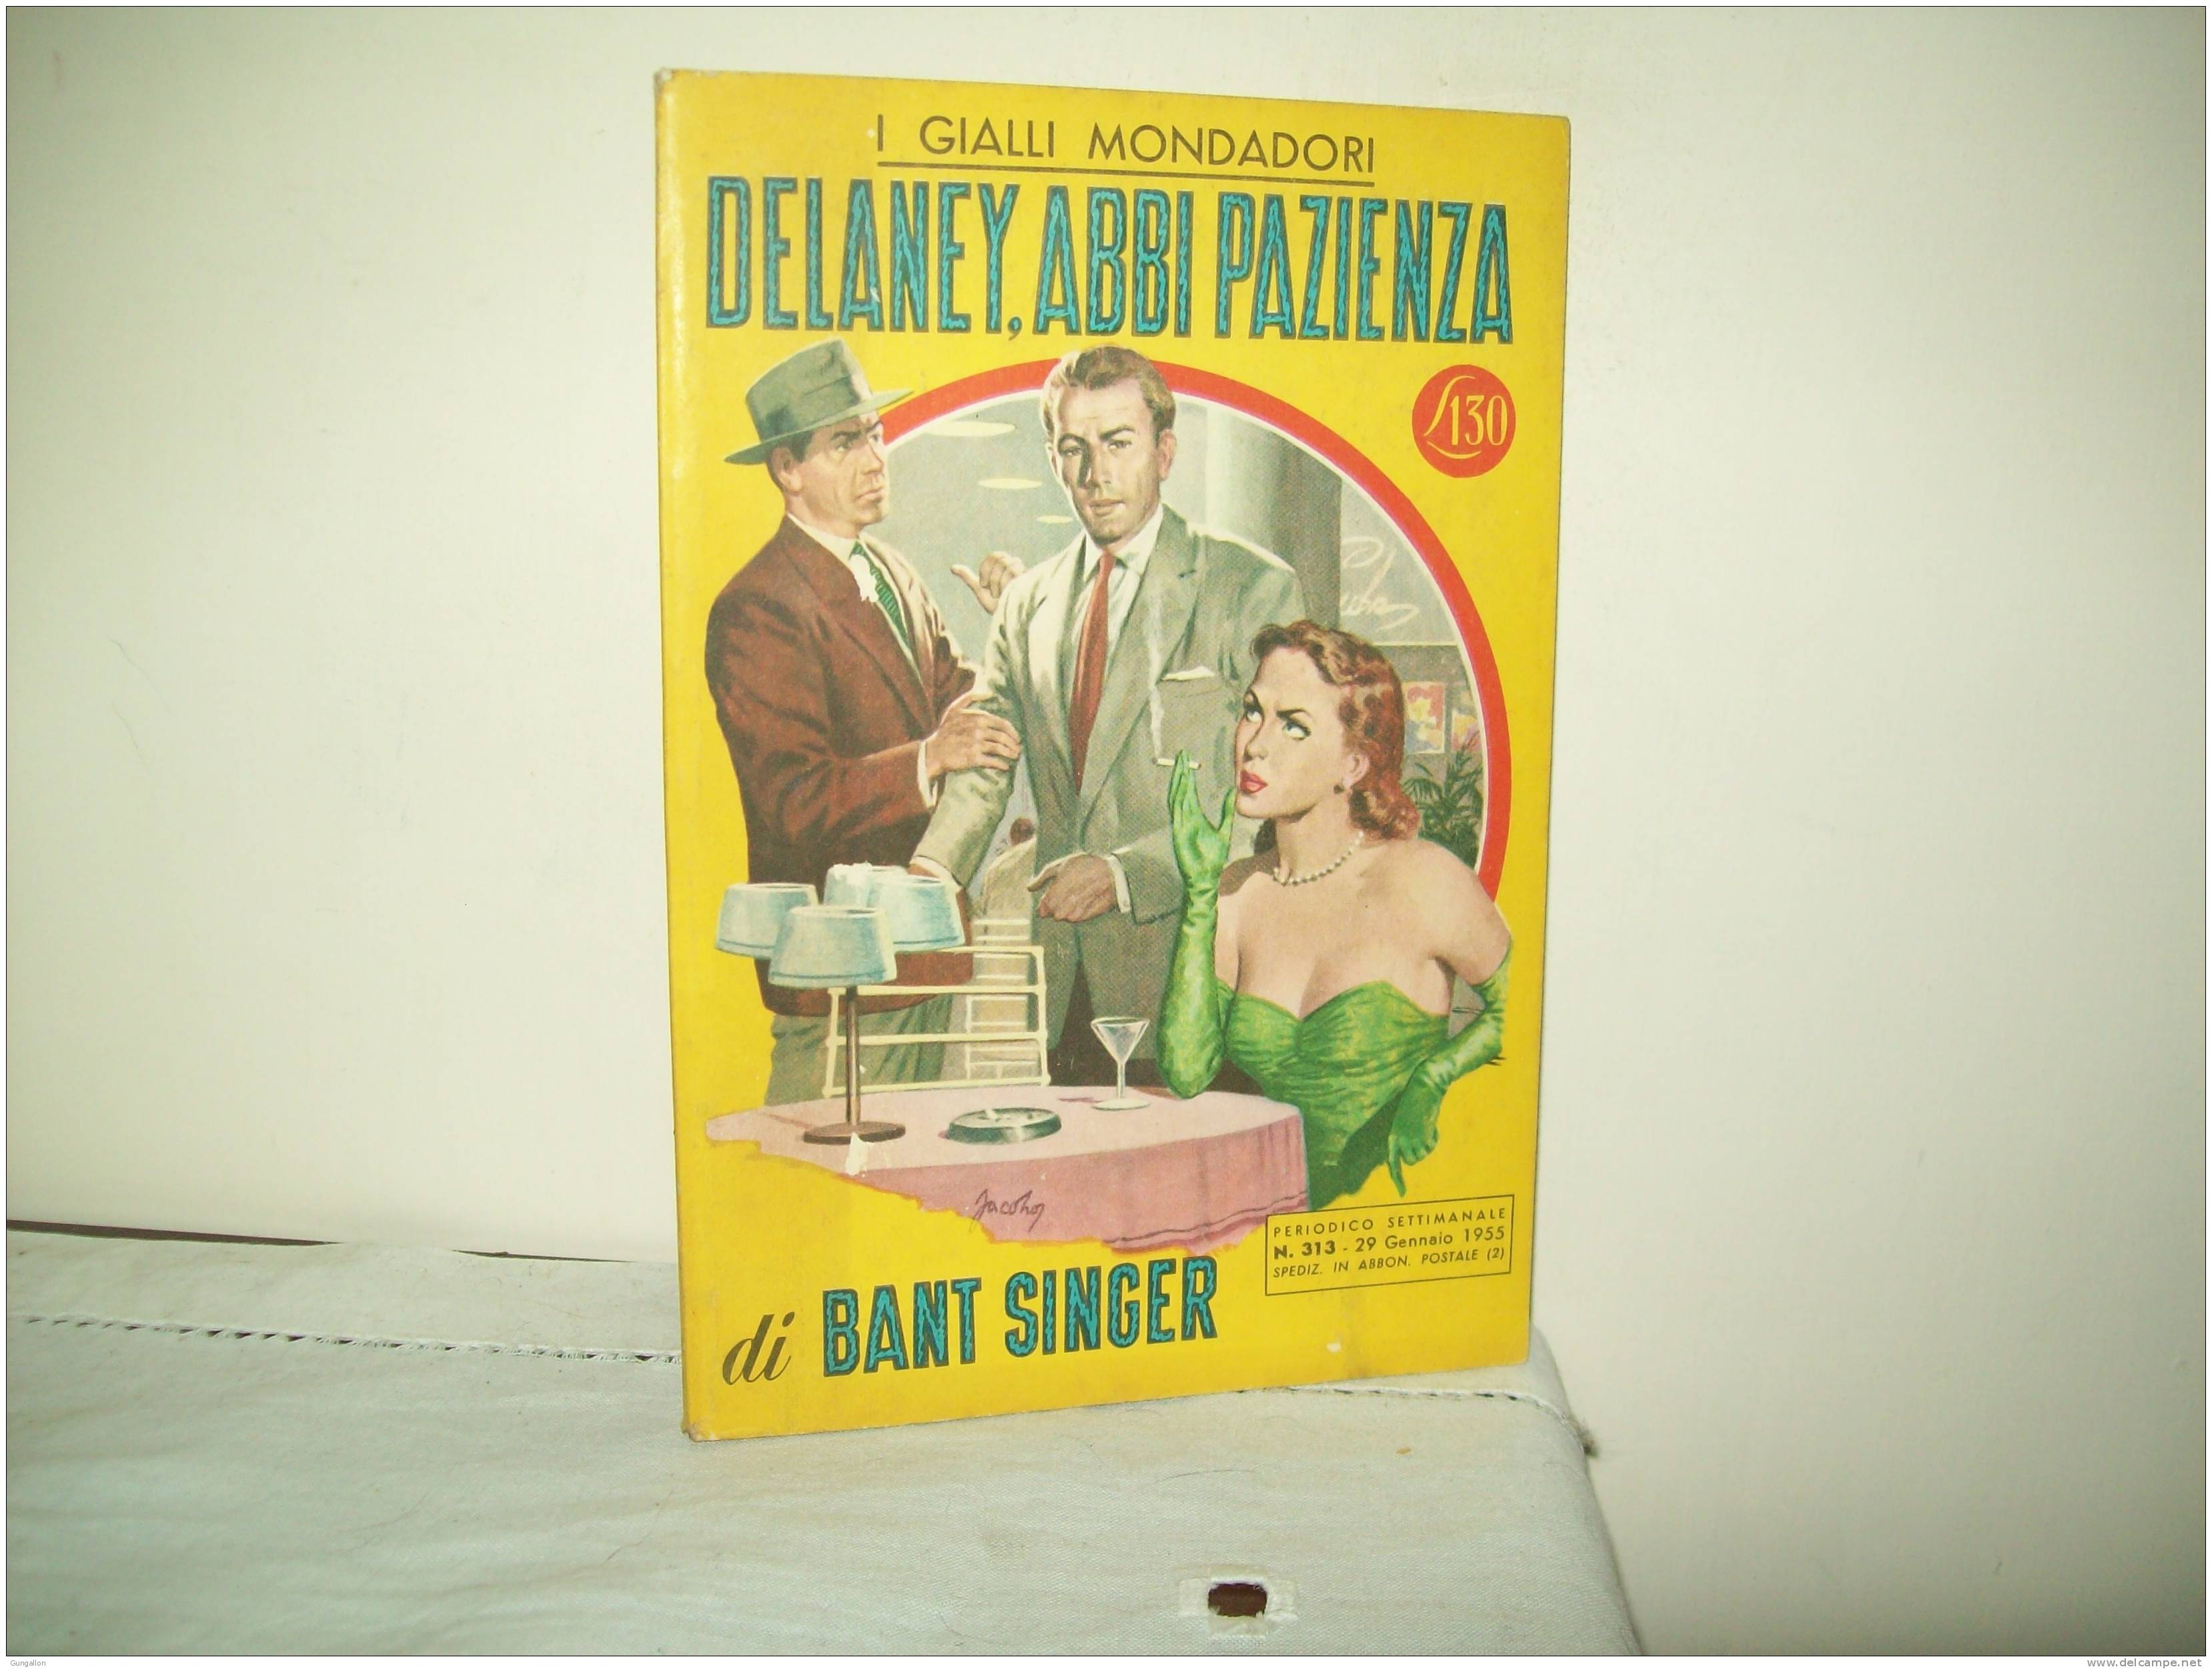 I Gialli Mondadori (Mondadori 1955)  N. 313  "Delaney Abbi Pazienza"  Di Bant Singer - Gialli, Polizieschi E Thriller